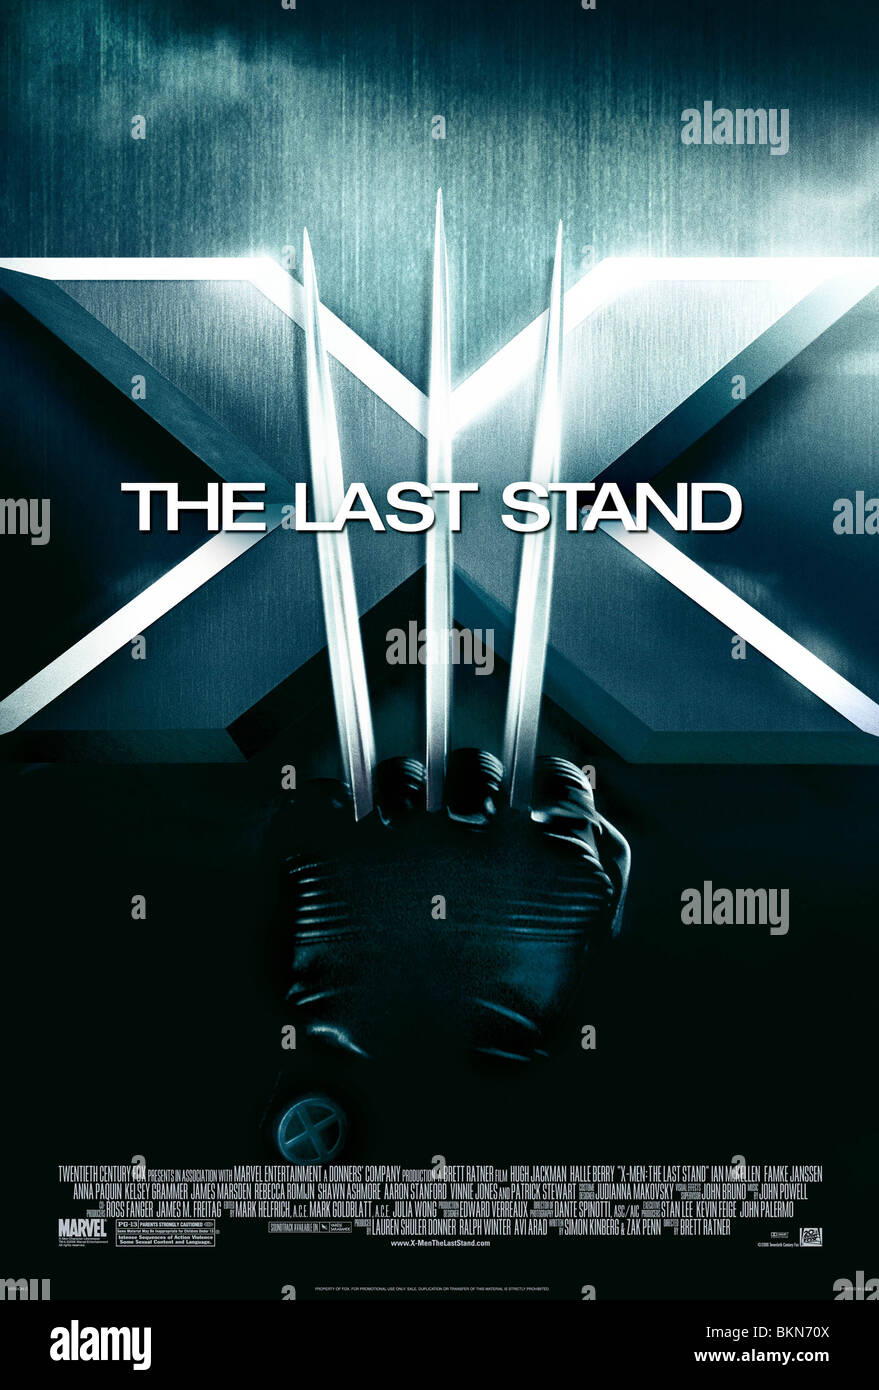 X-MEN: THE LAST STAND (2006) X3 (ALT) POSTER XLS 001-36 Stock Photo